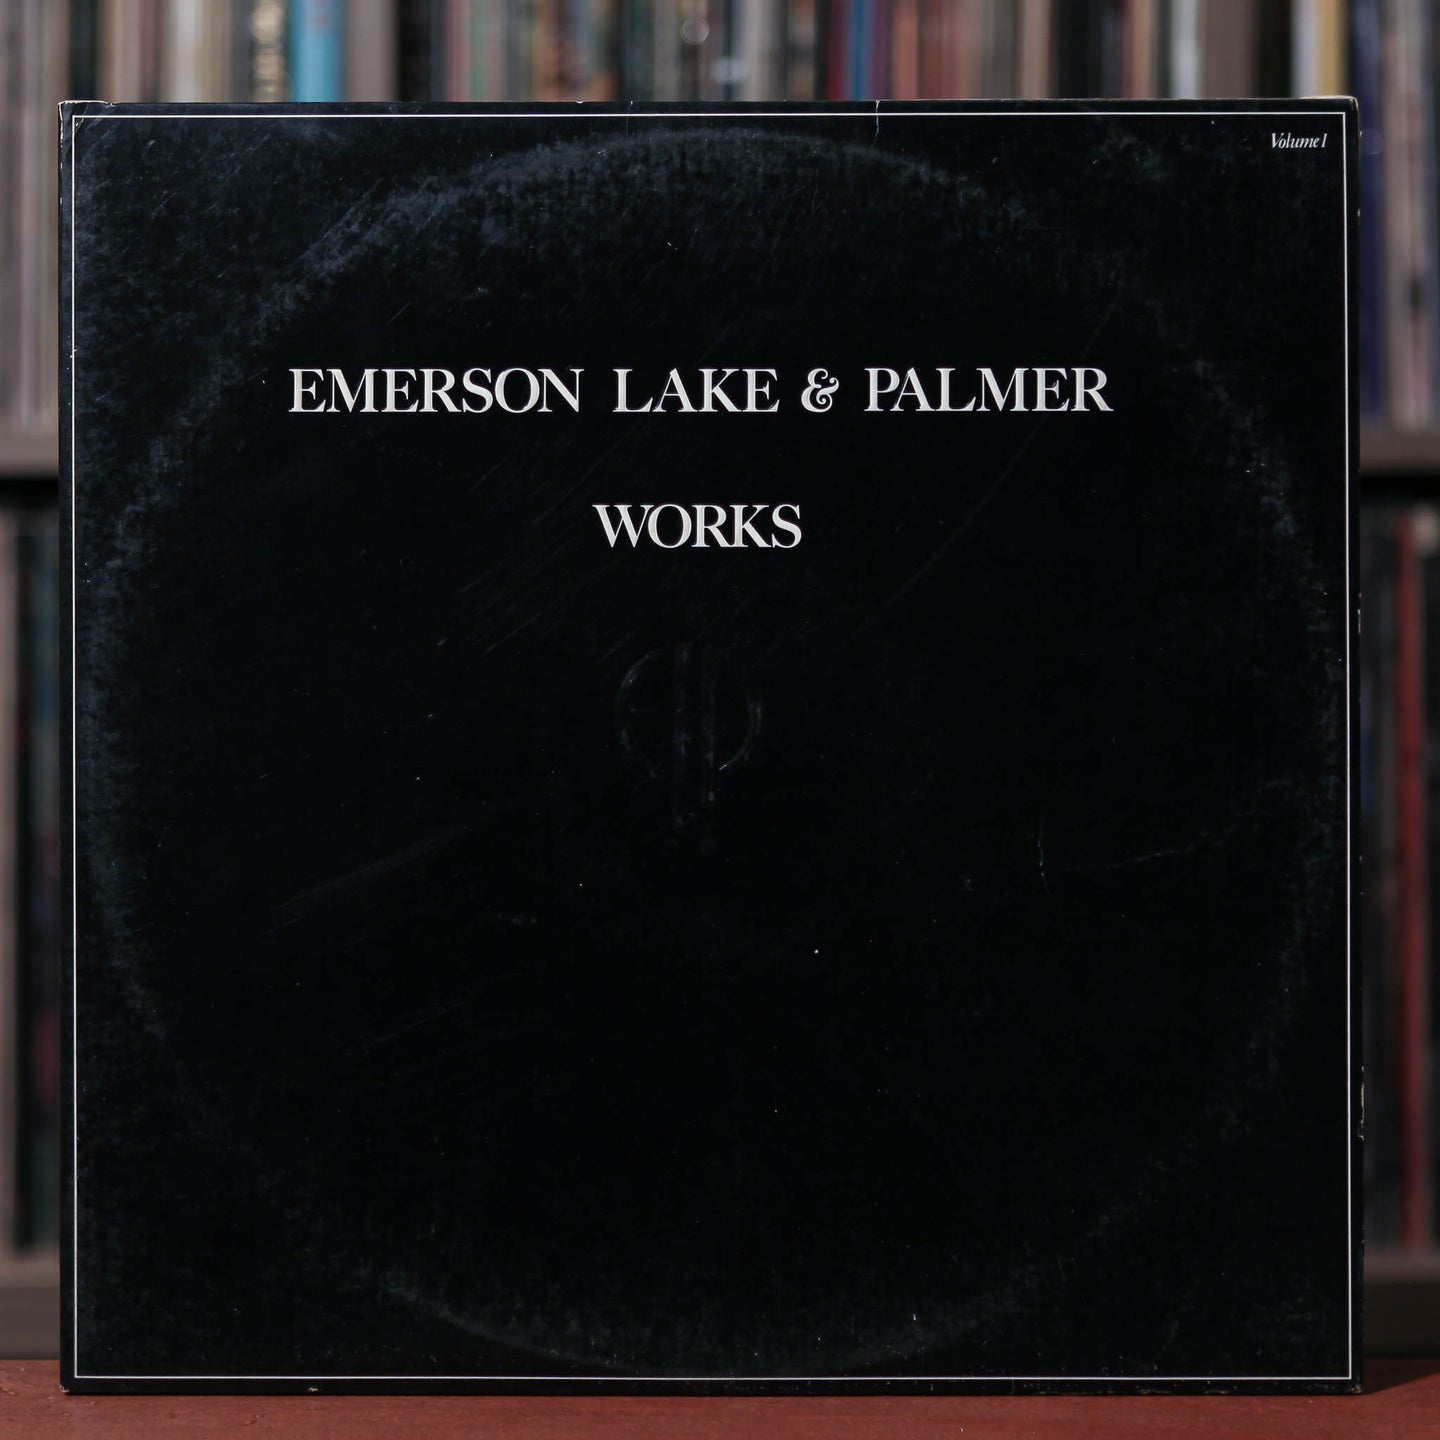 Emerson Lake & Palmer - Works Volume 1 - 2LP - 1977 Atlantic, VG/VG